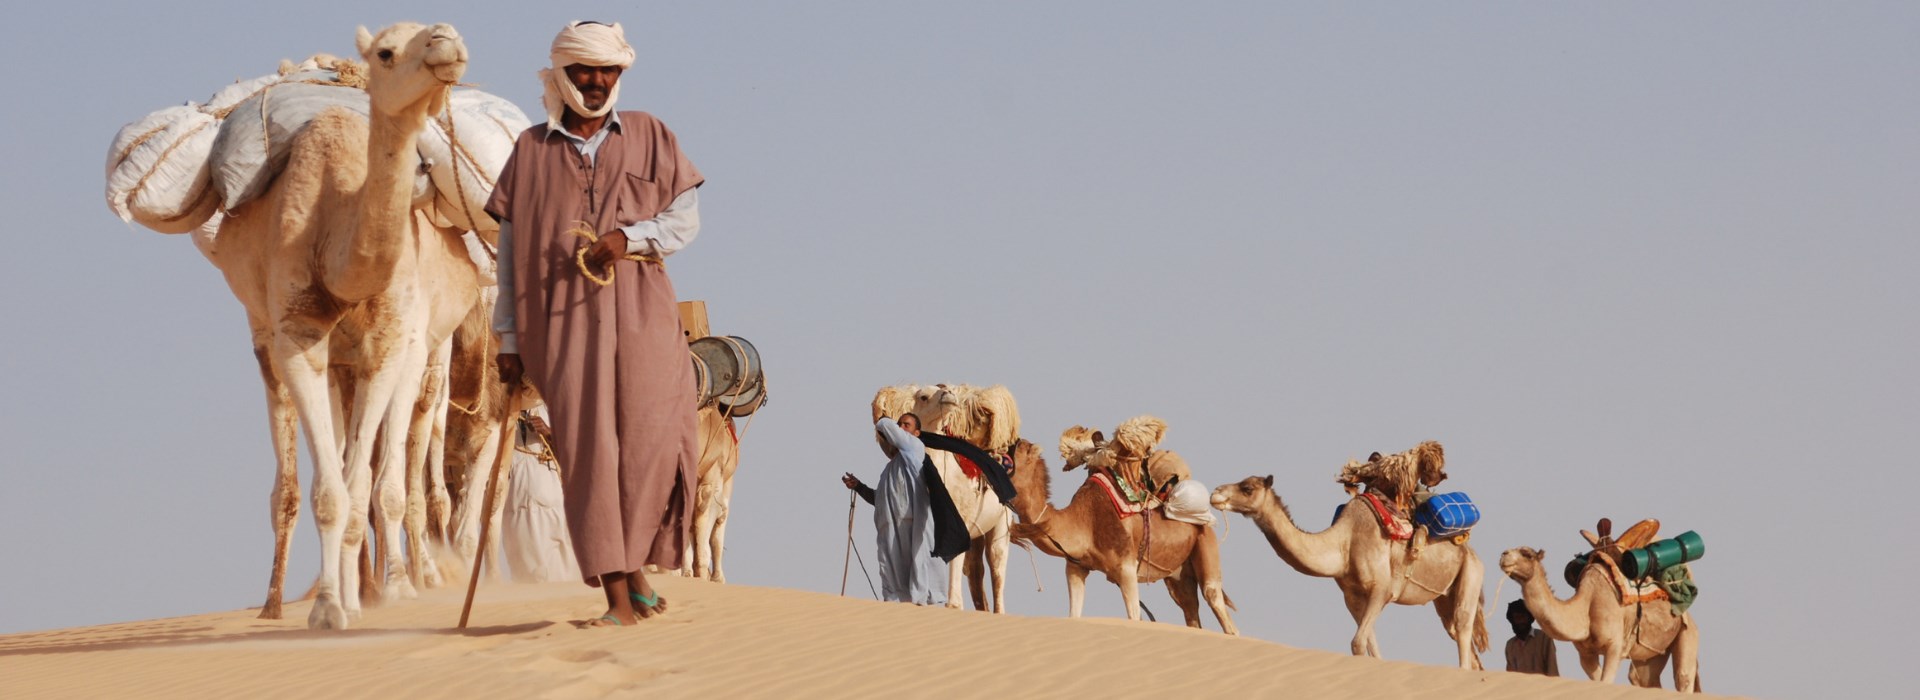 Visiter Touiyert - Mauritanie